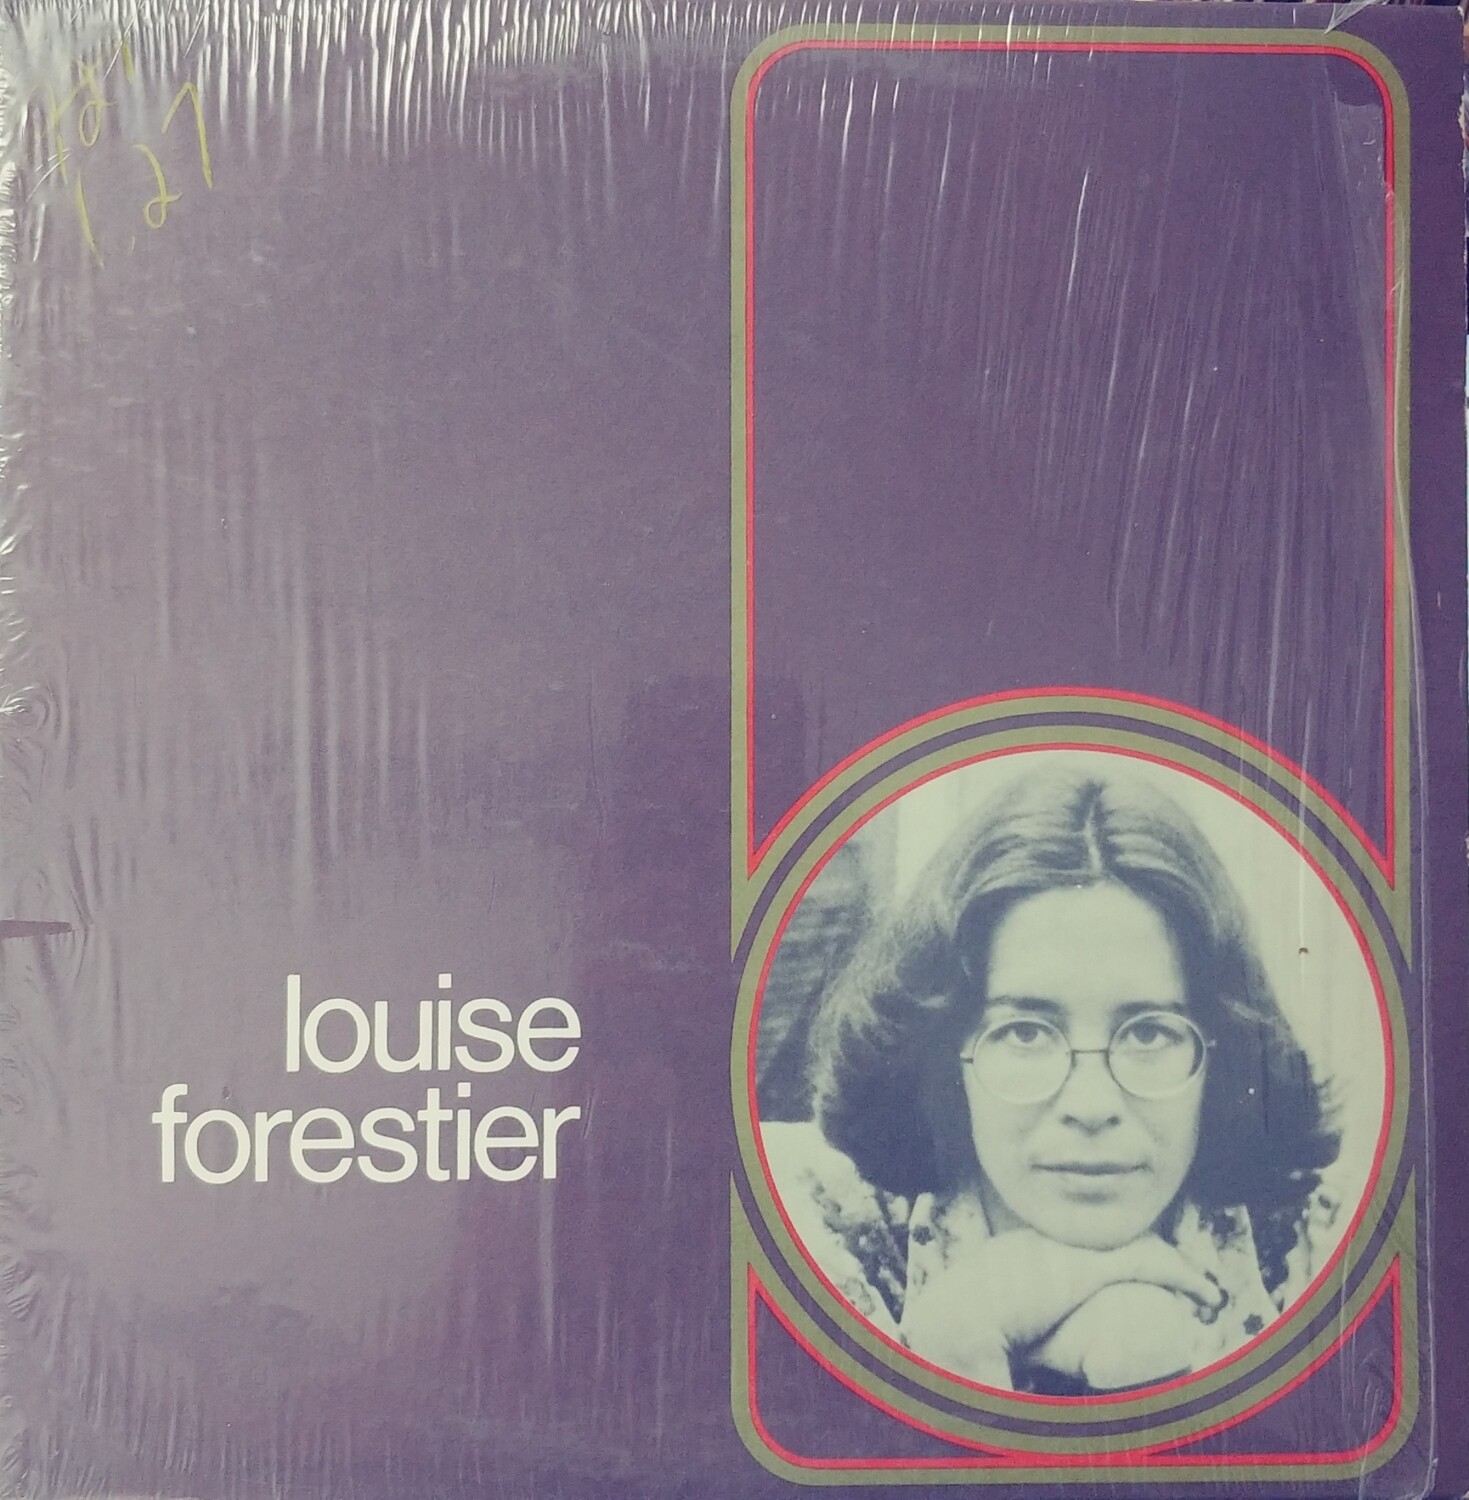 Louise Forestier - Louise Forestier